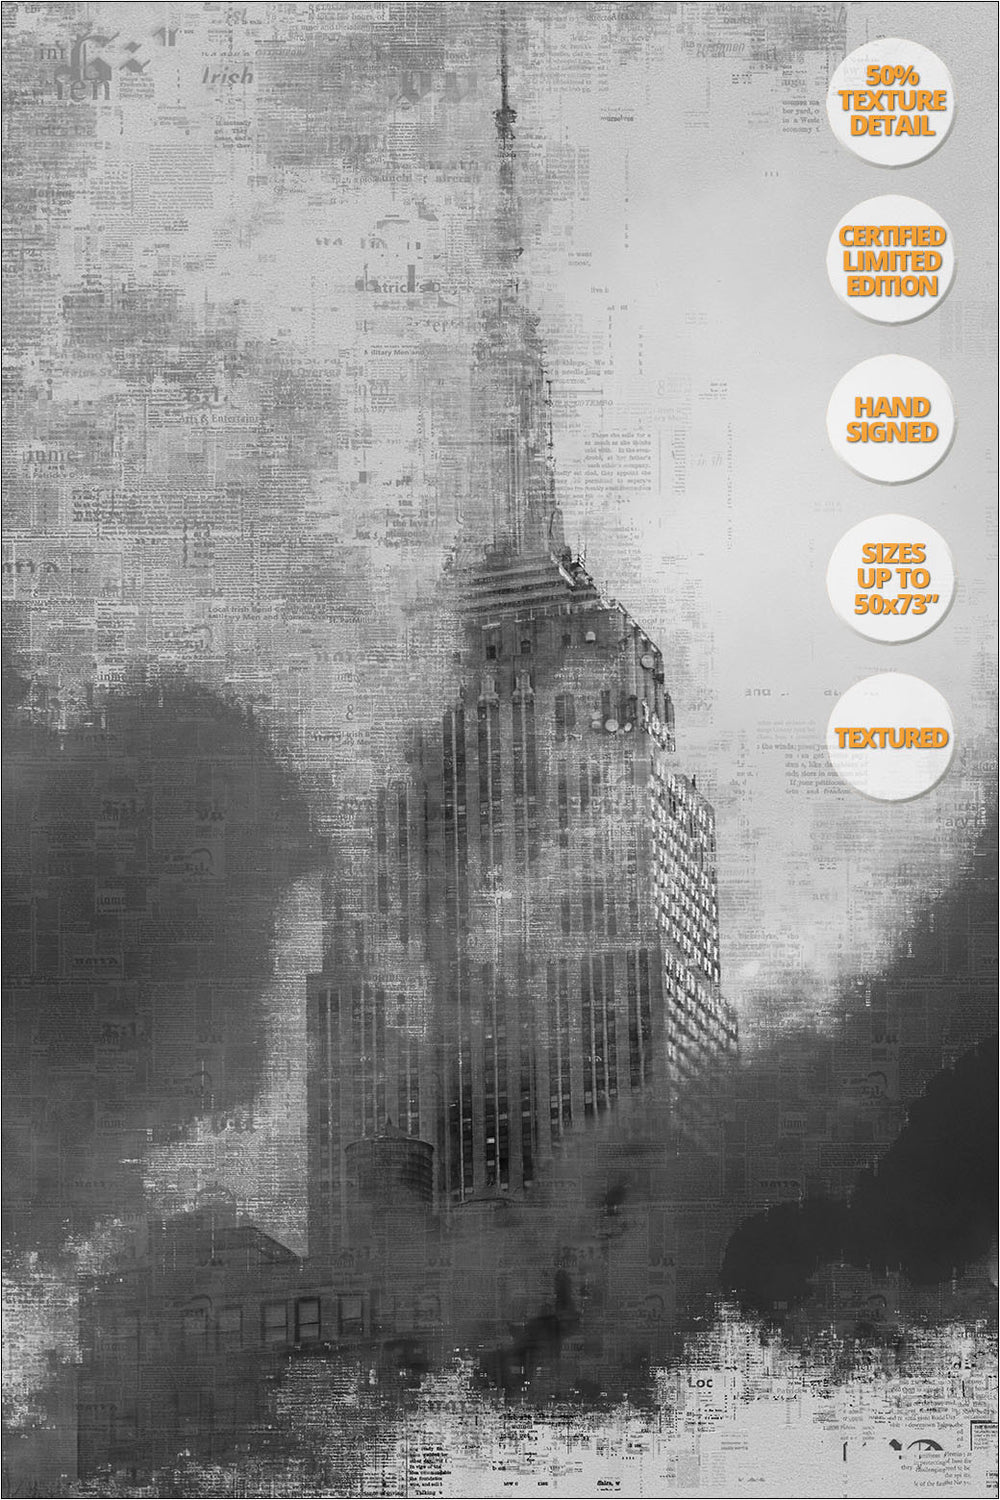 The Empire State, Manhattan, New York, United States. | 50% Detail.